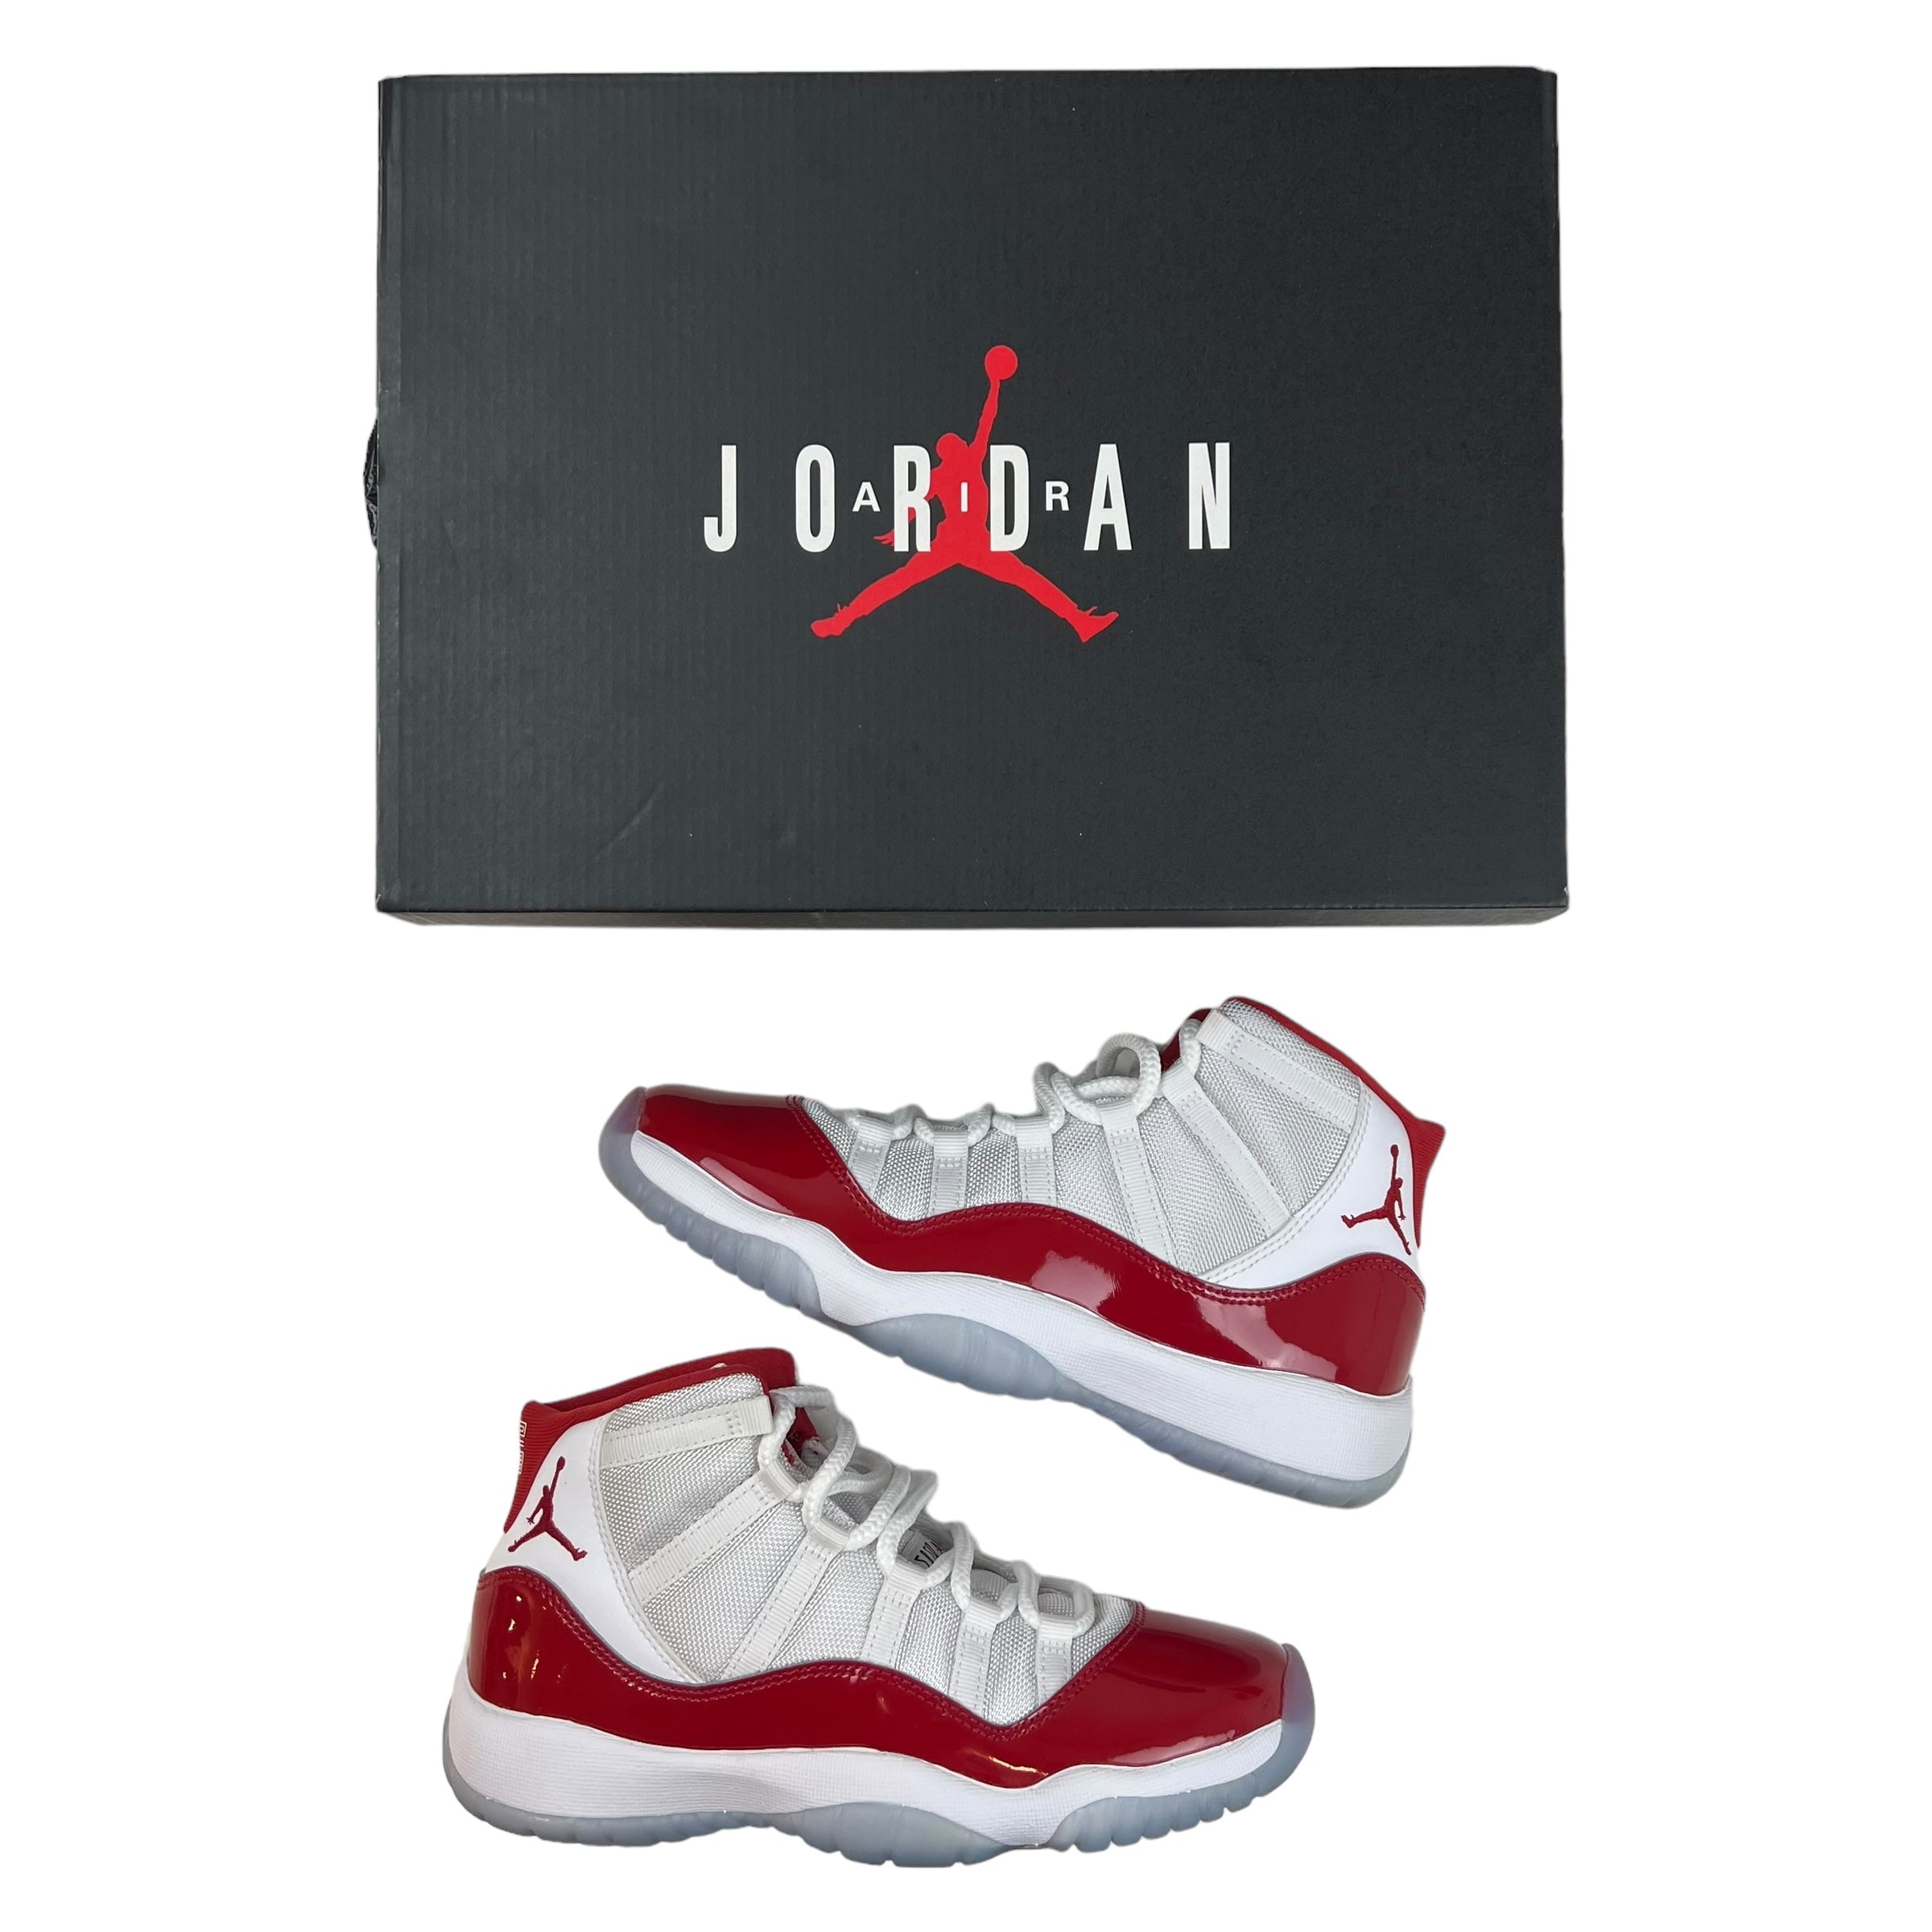 Air Jordan 11 Cherry (Used)